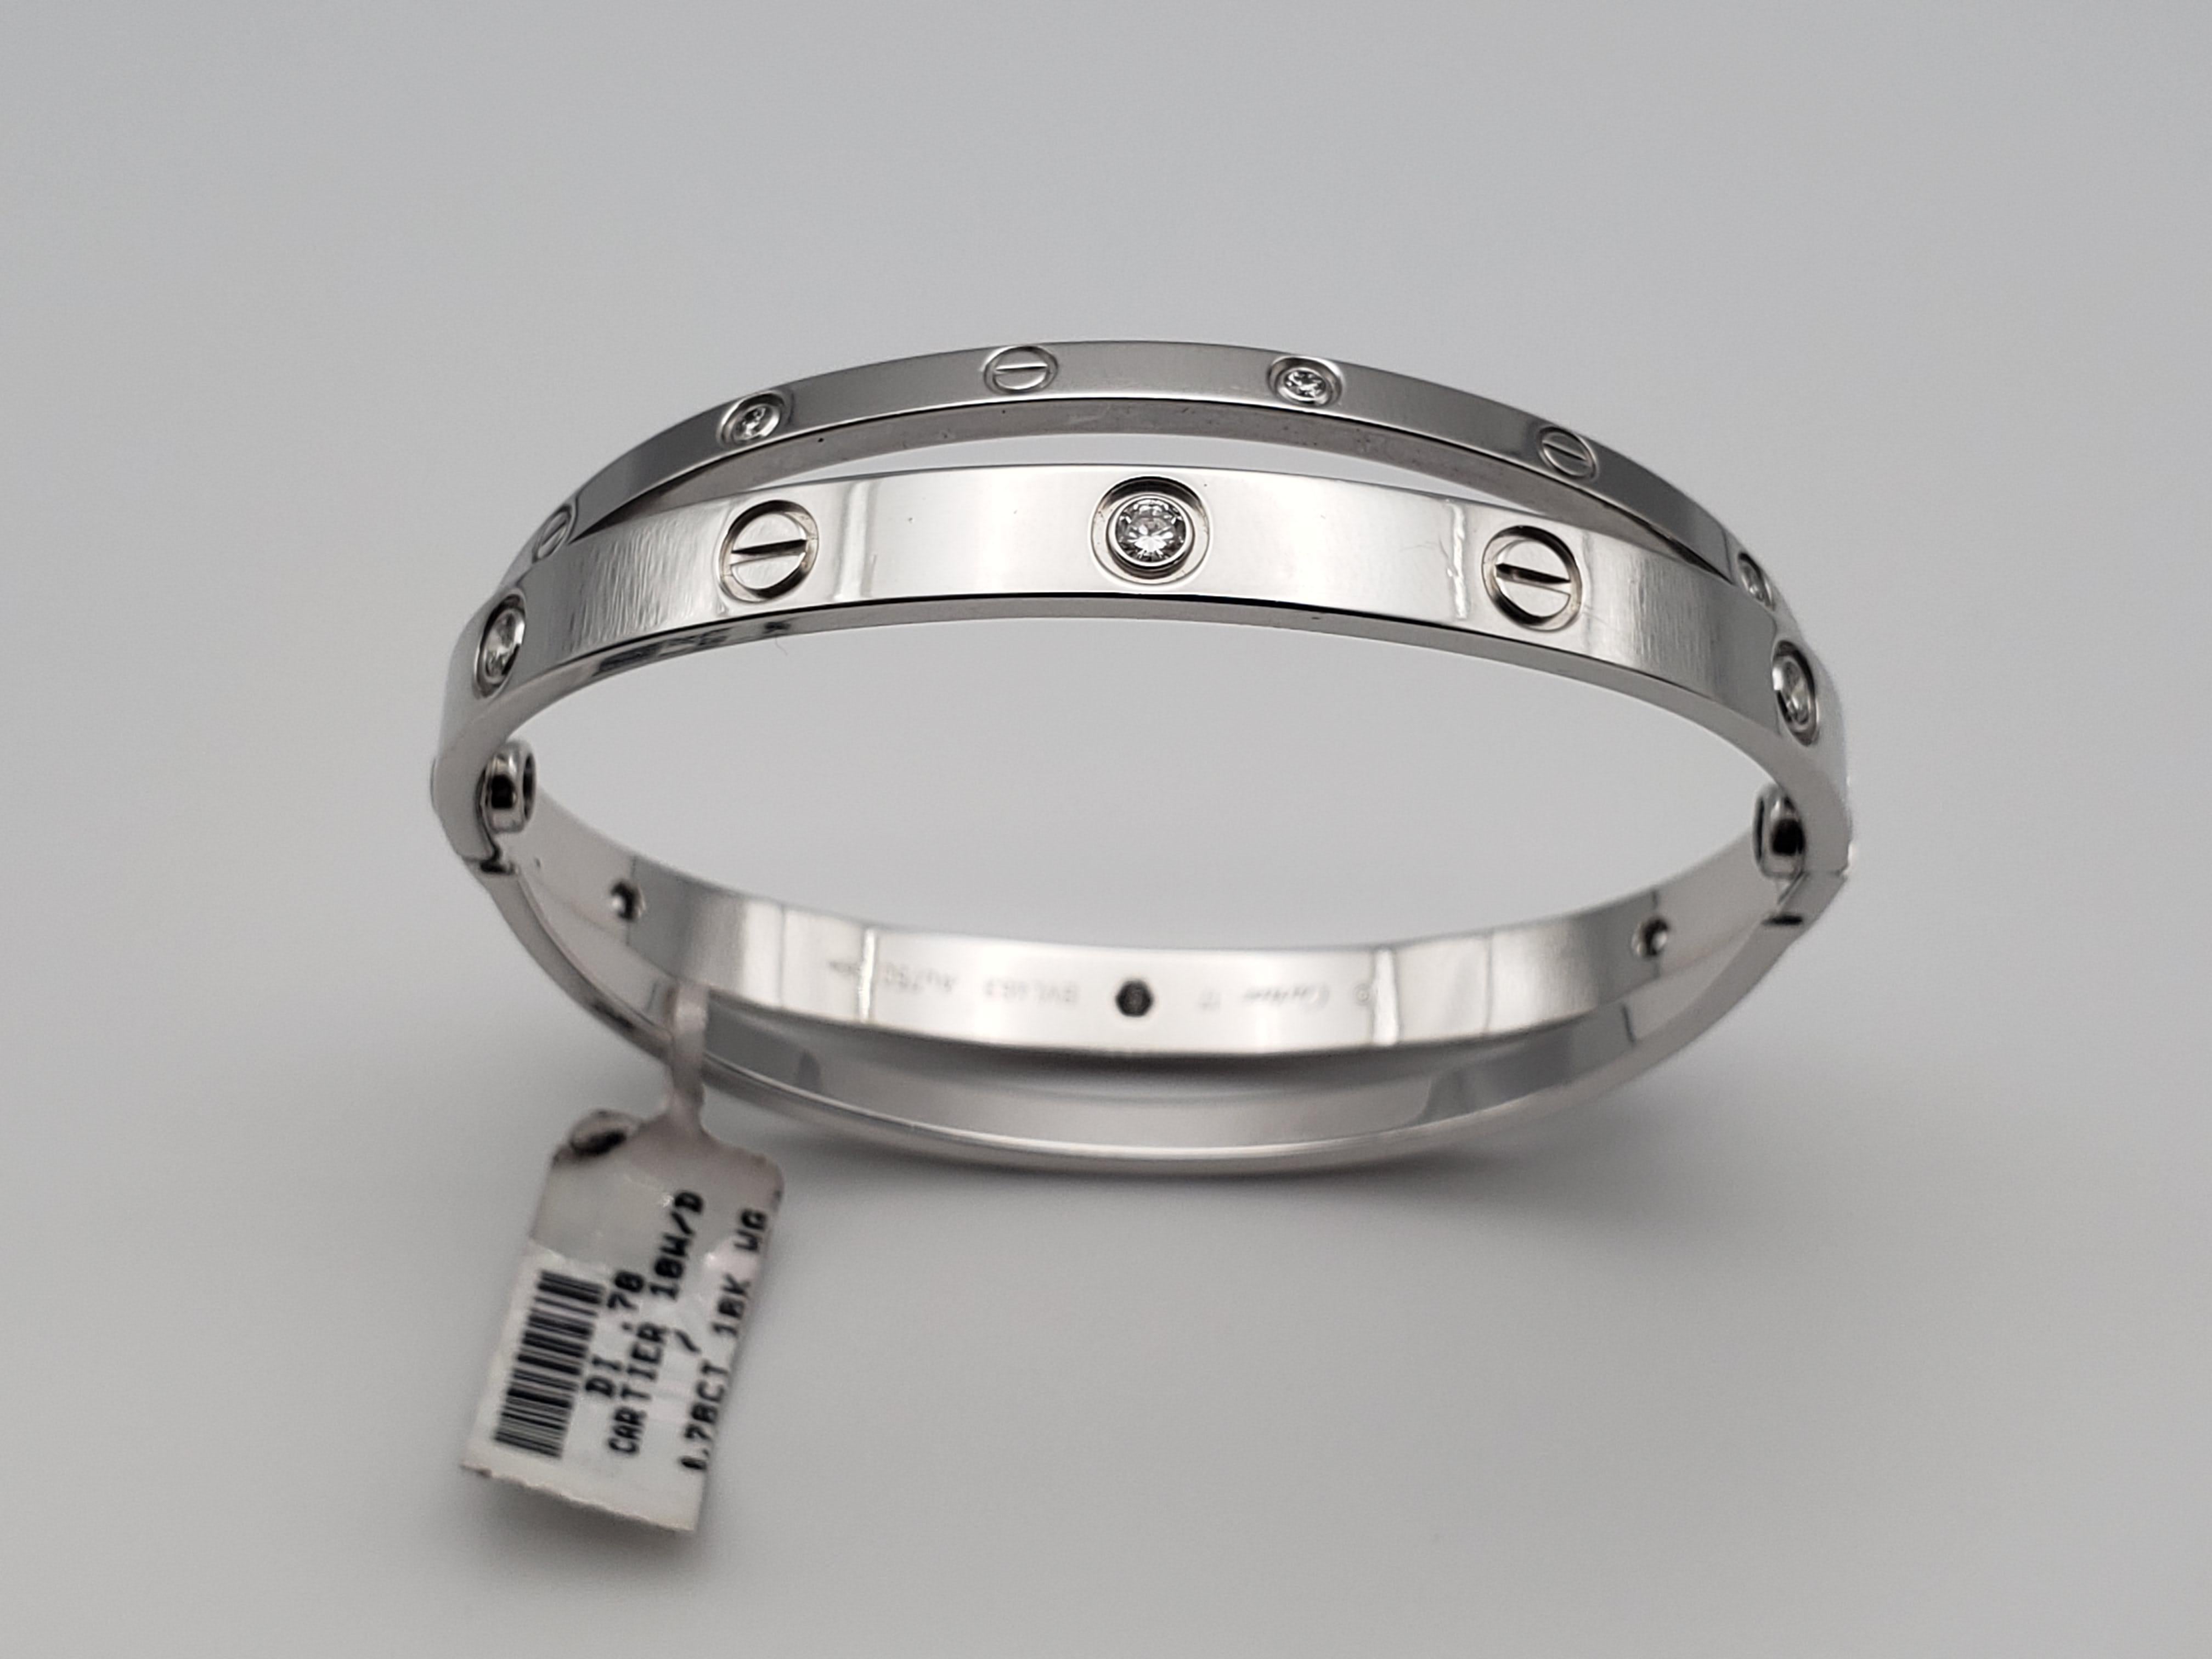 cartier bracelet silver